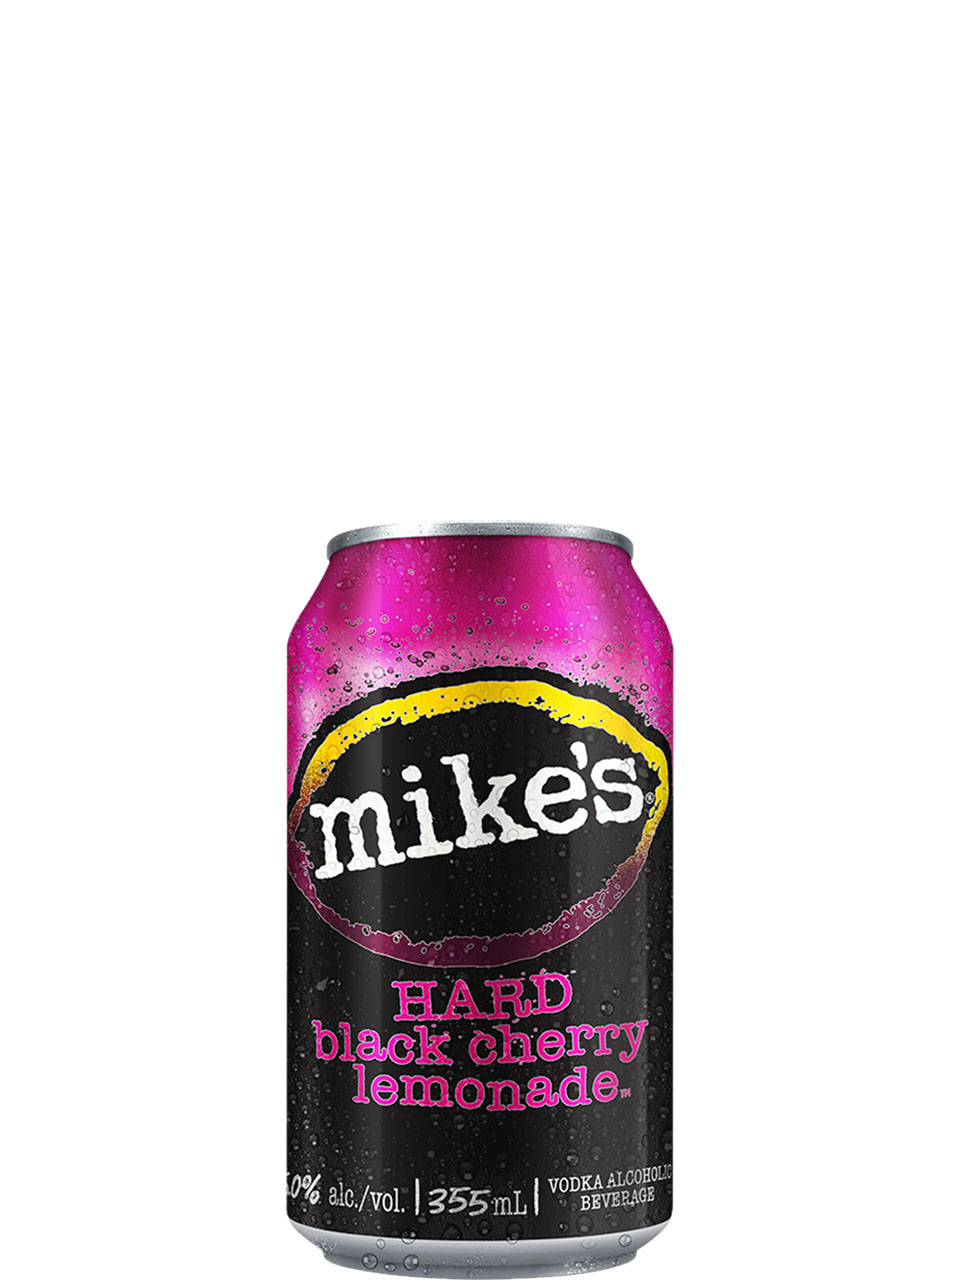 Mike's Hard Black Cherry Lemonade 6 Pack Cans